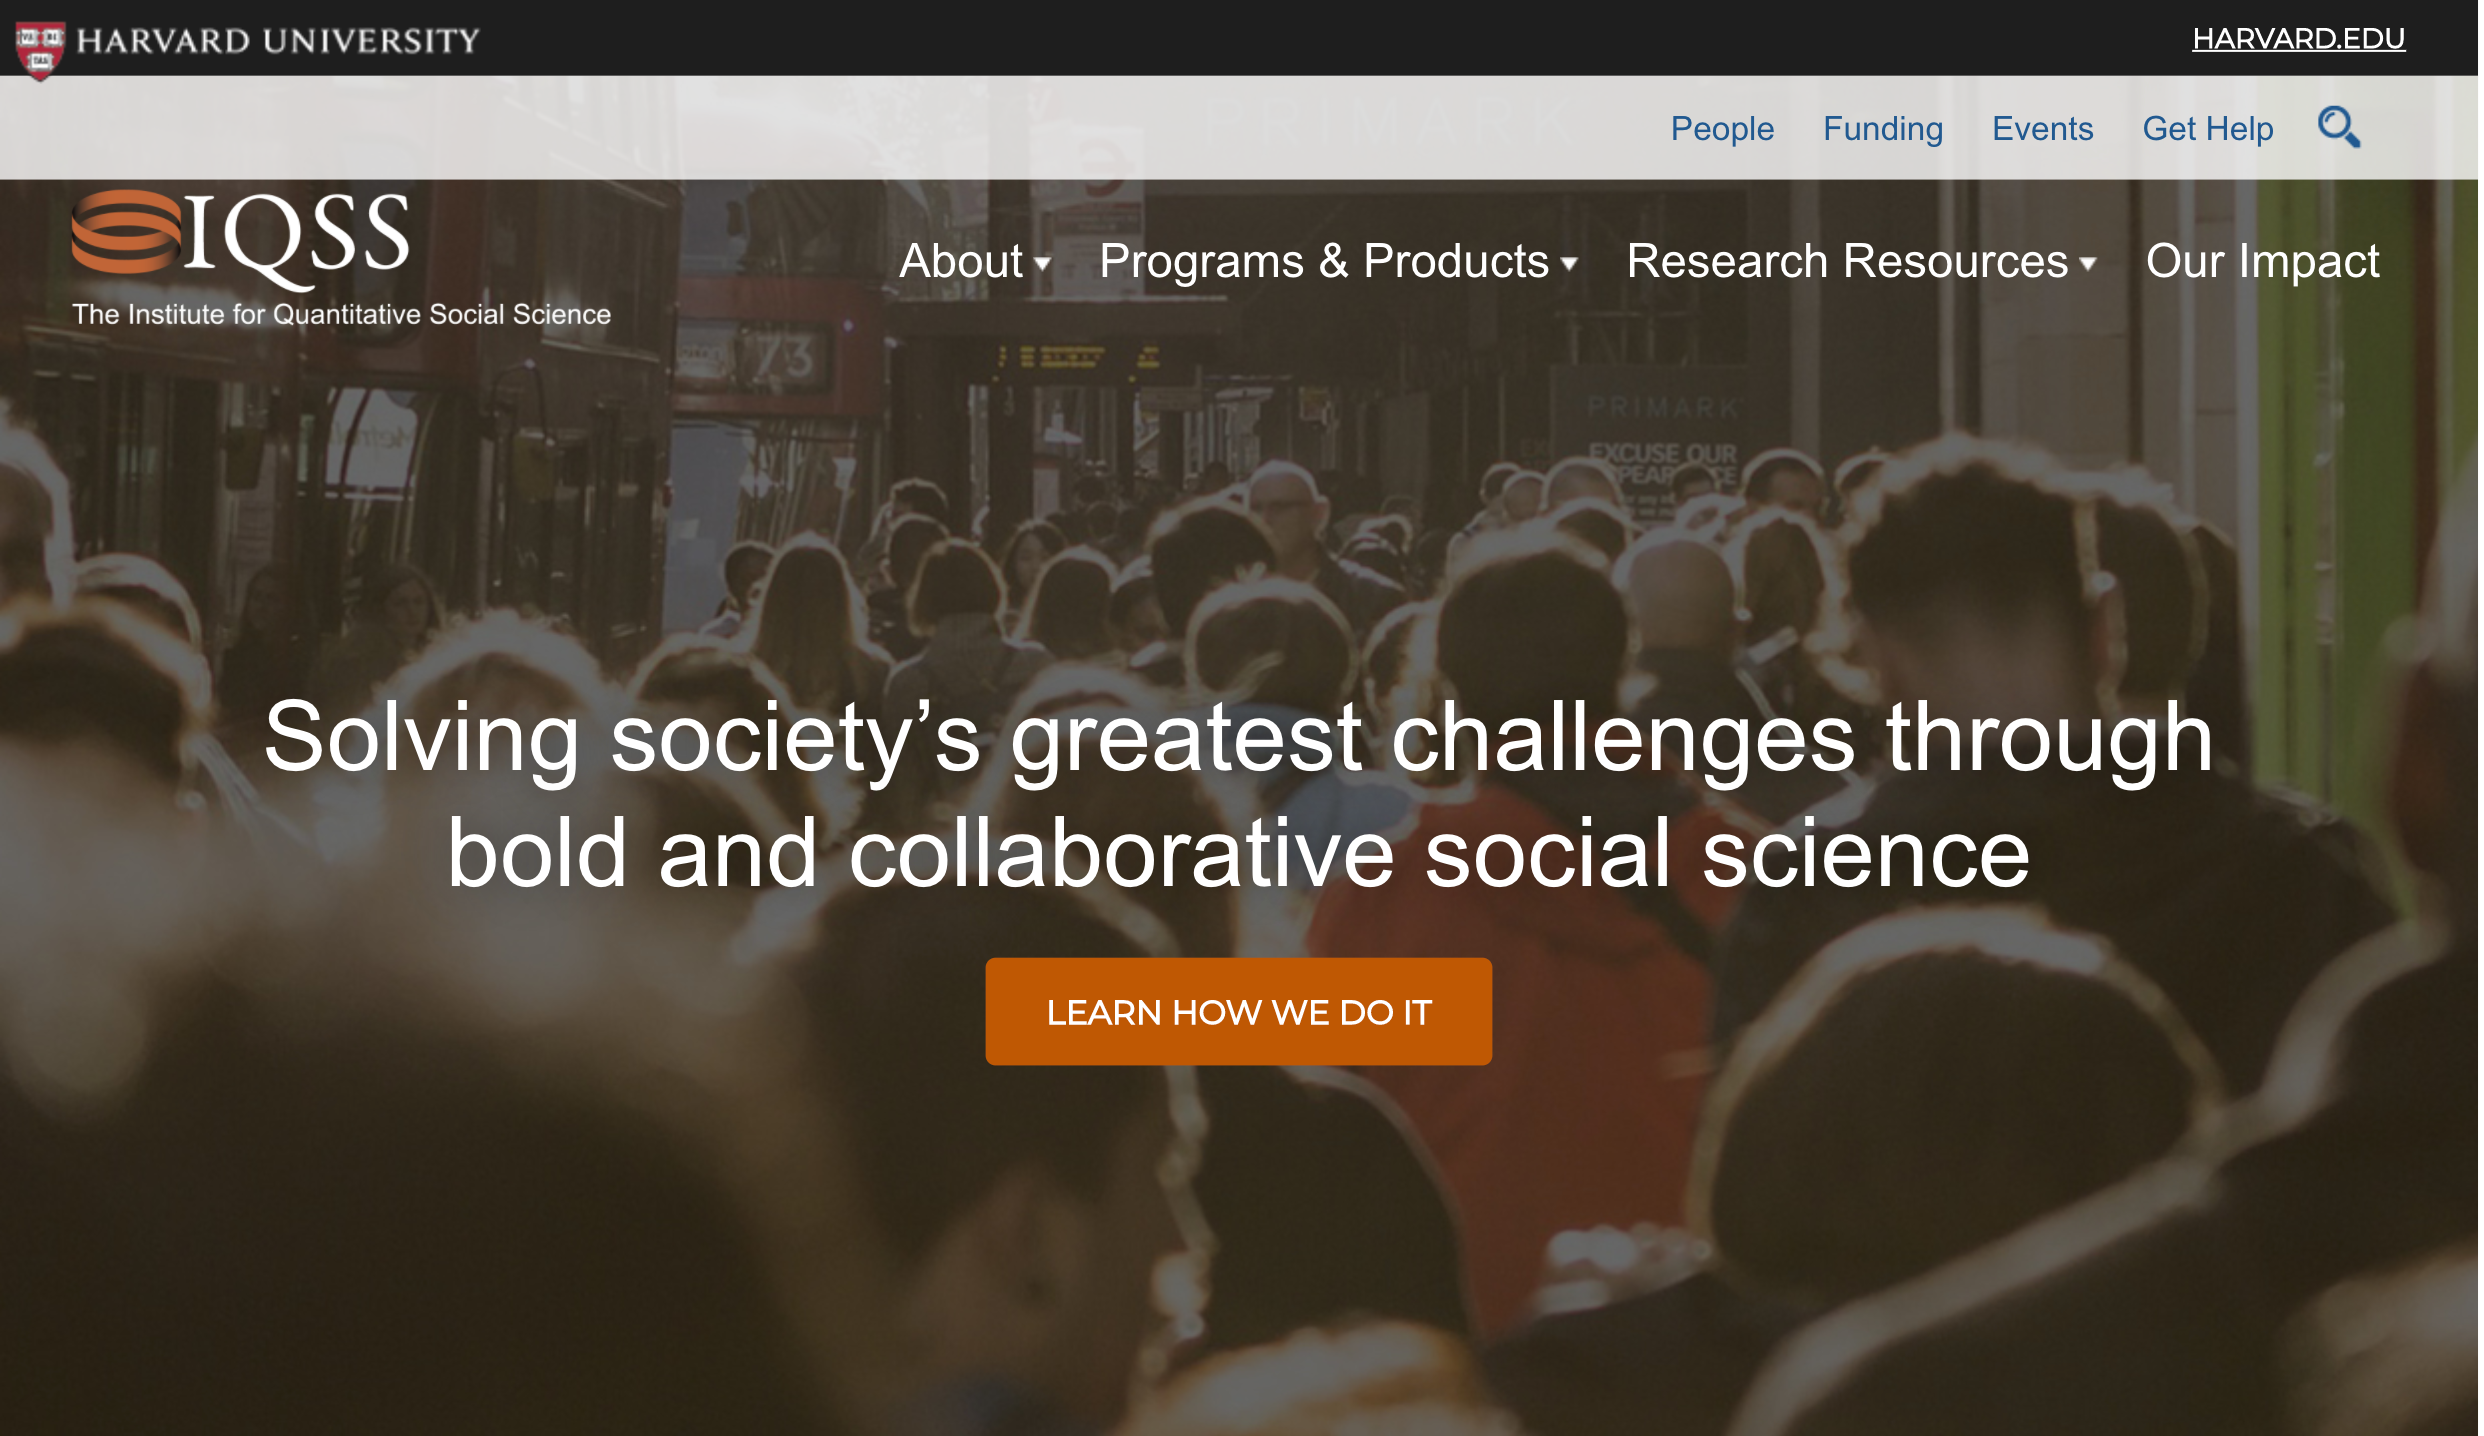 IQSS: The Institute for Quantitative Social Science